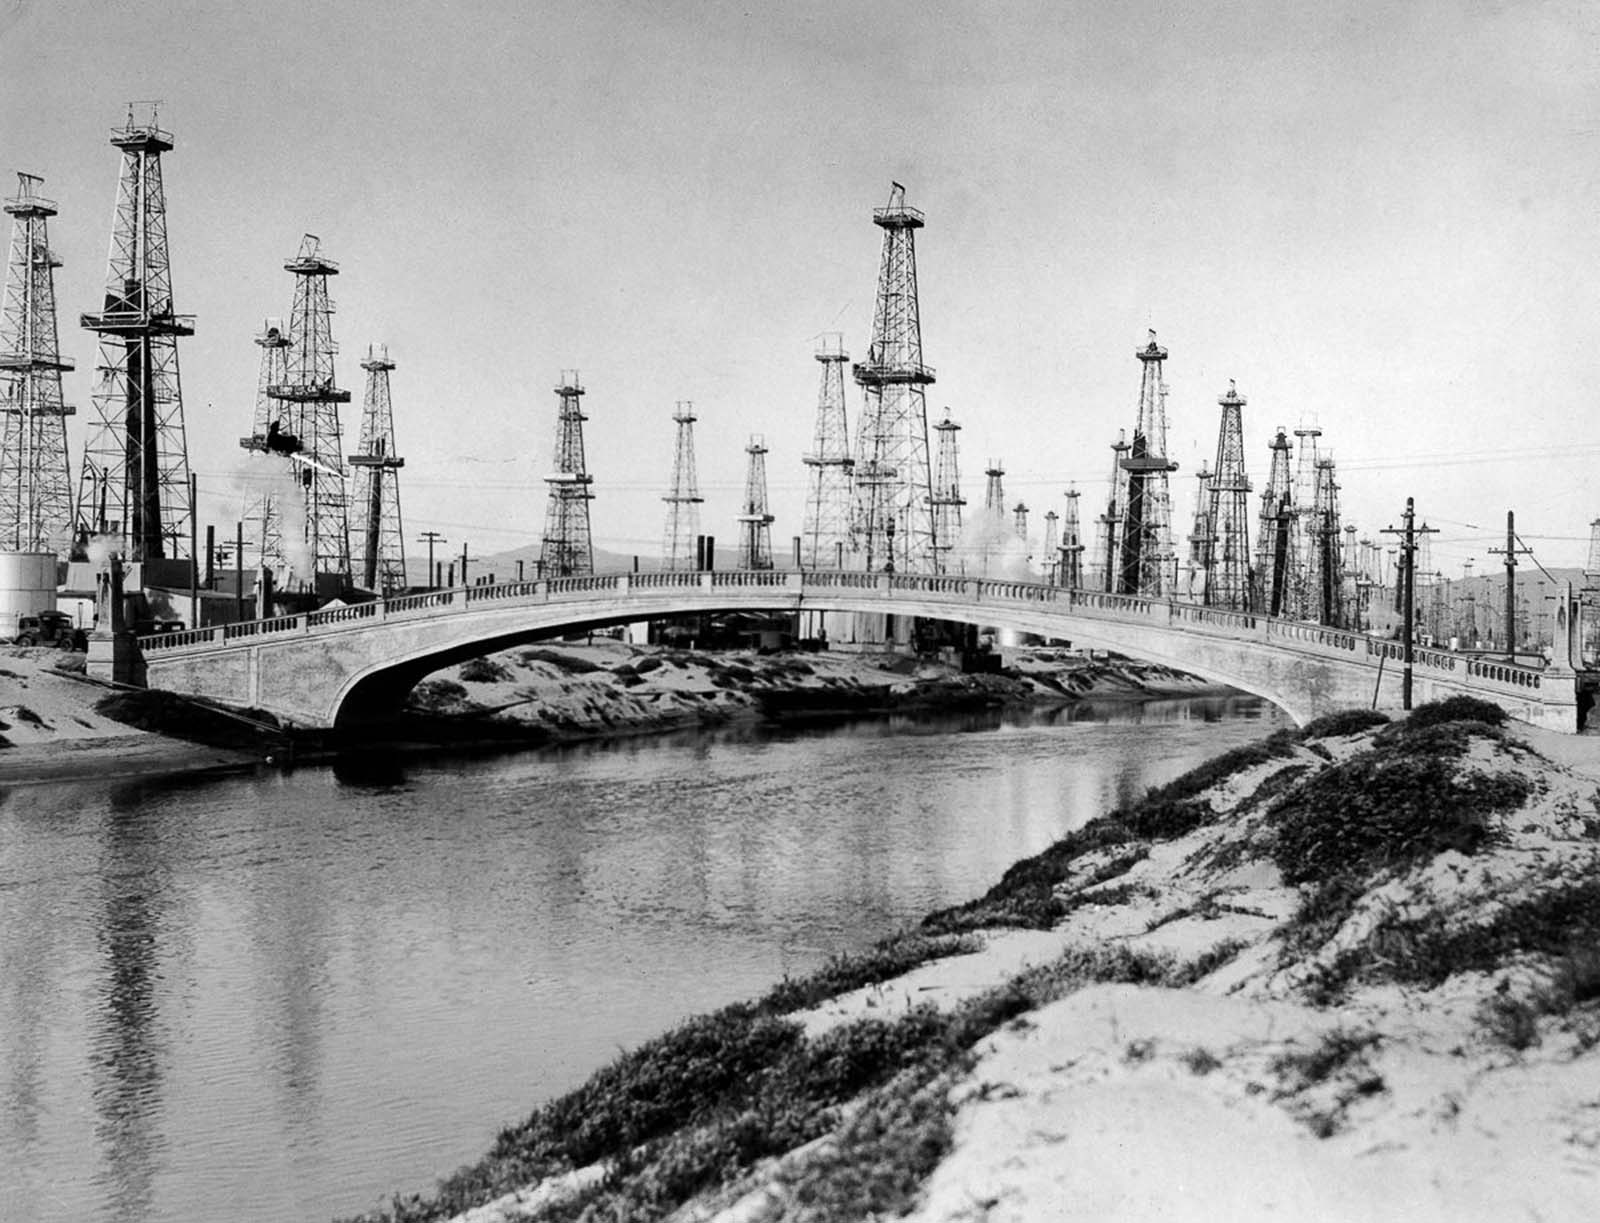 An oilfield in Venice, California, 1930